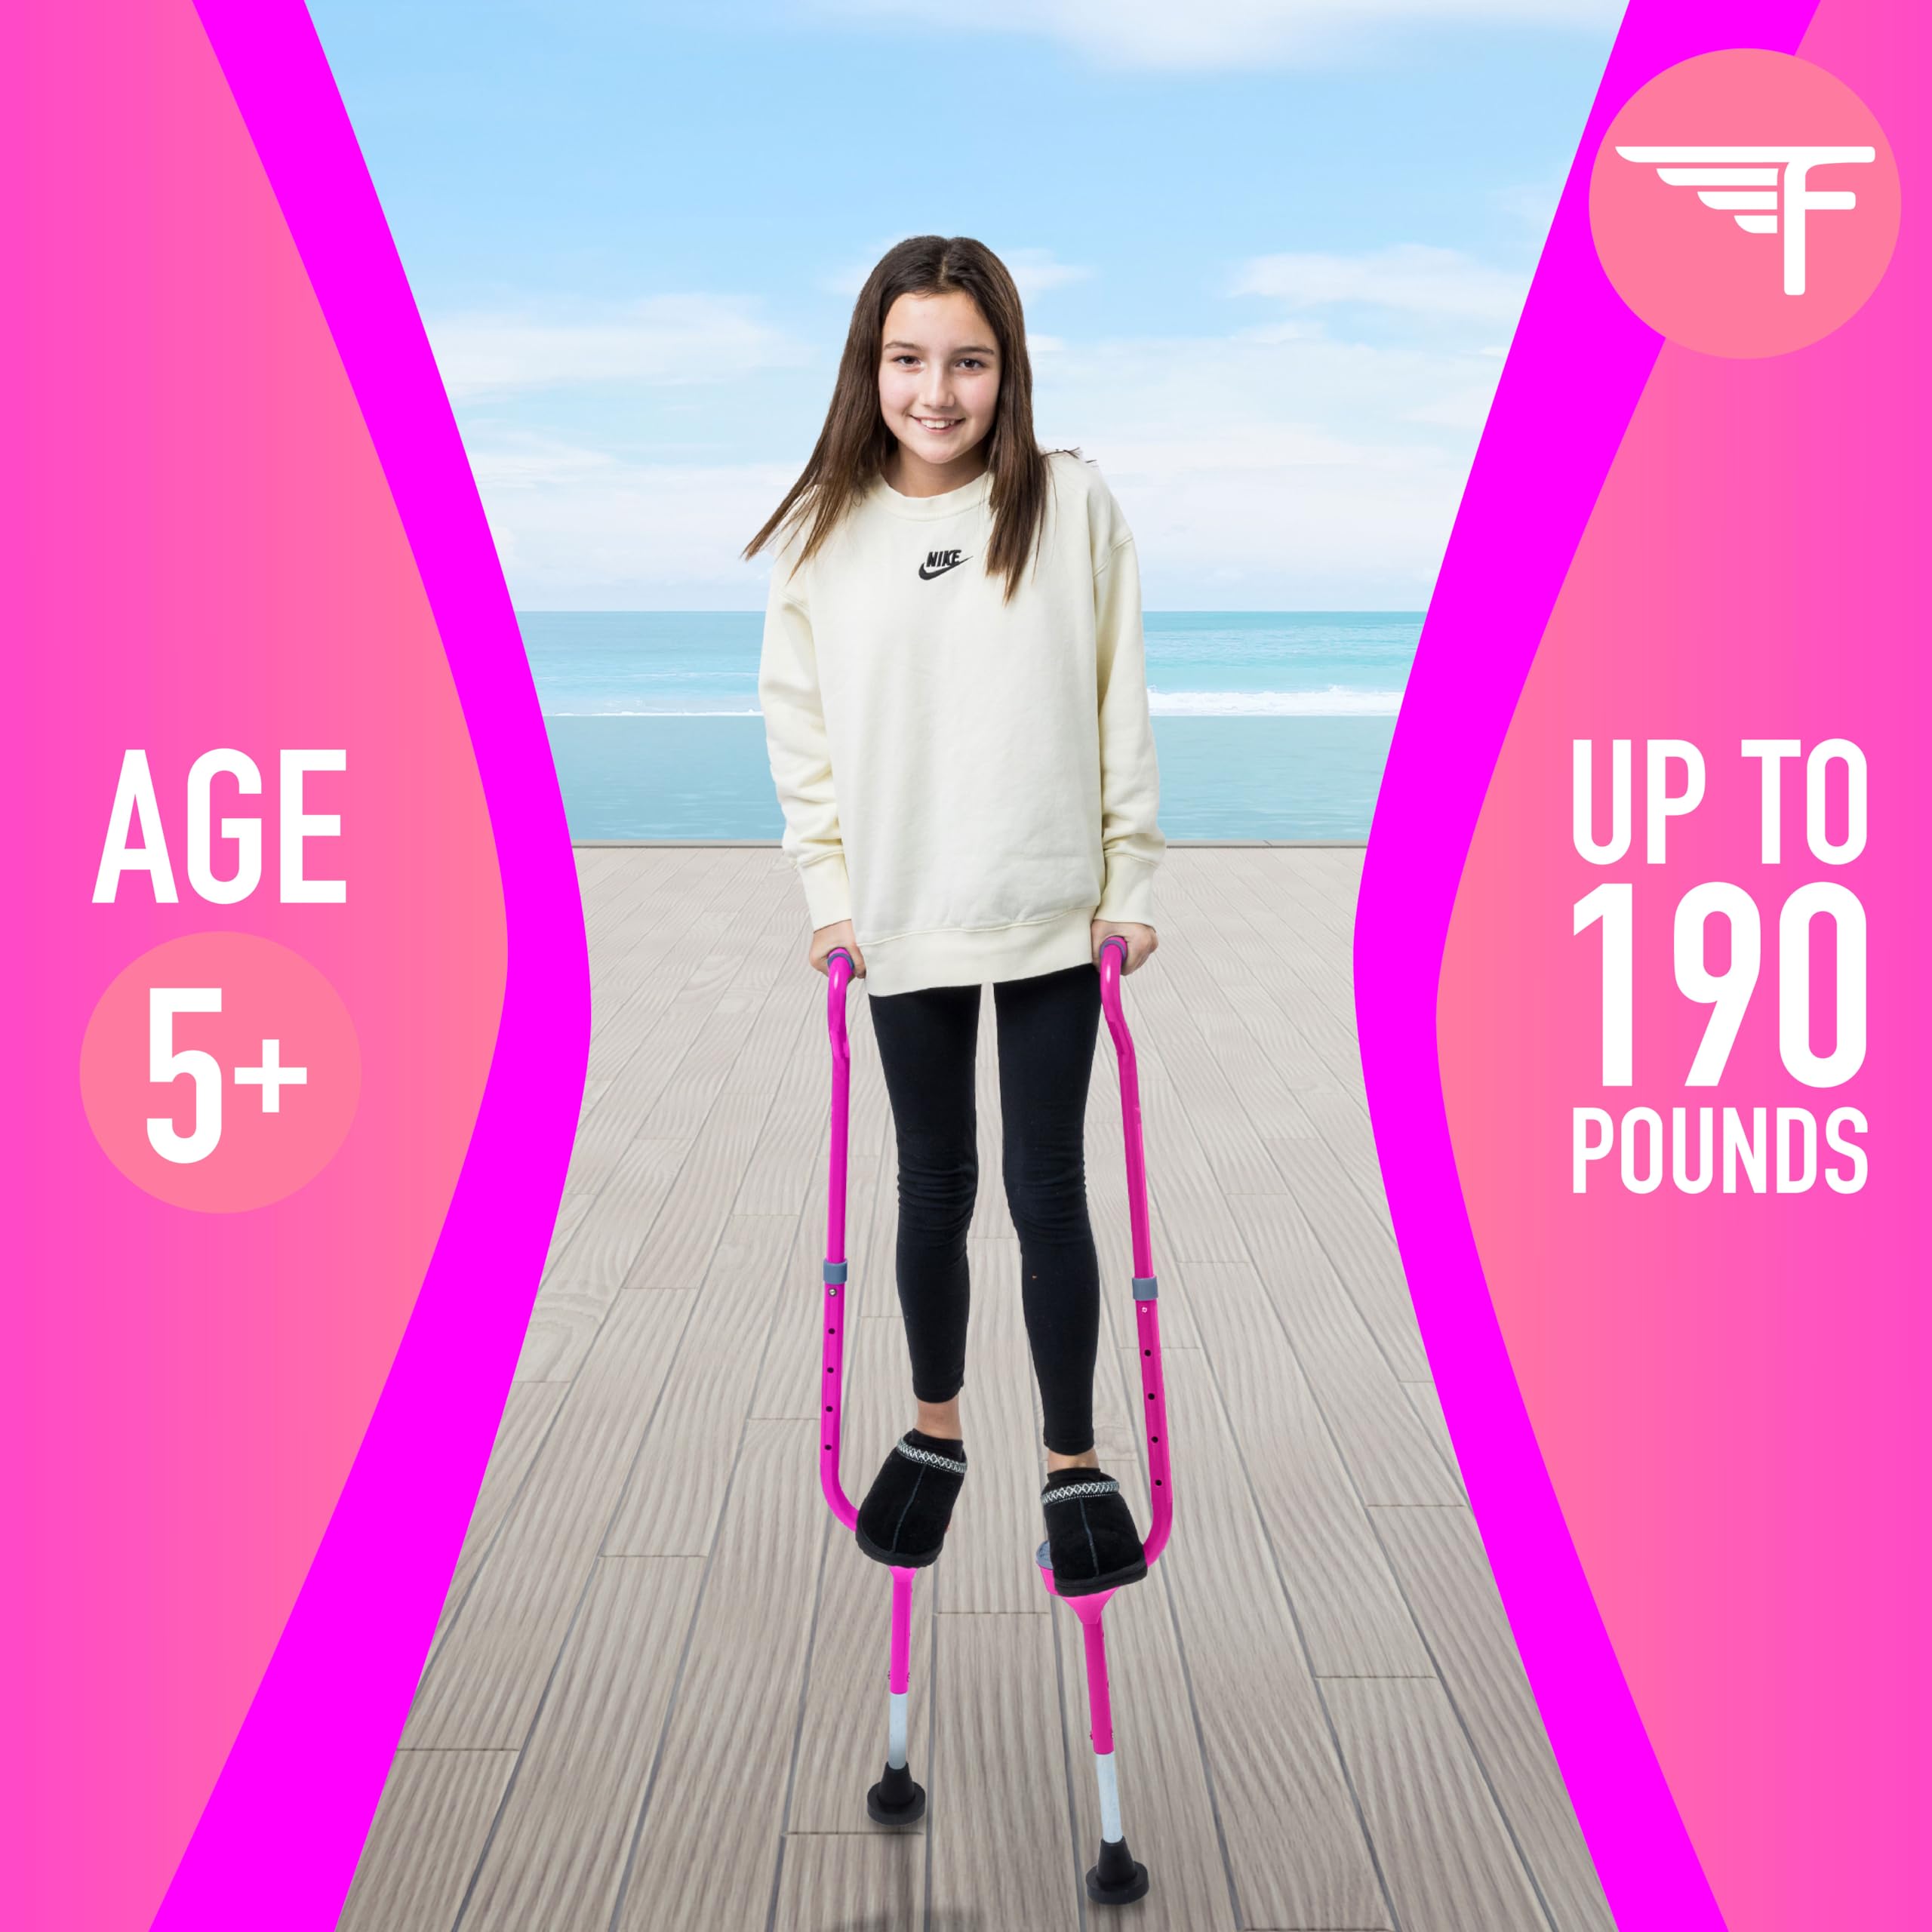 Flybar Maverick Walking Stilts for Kids - 5 Adjustable Height’s, Sturdy, Easy Assembly, Wide Non-Slip Rubber Bottom Tip, Foam Grips, Outdoor Toys for Kids 5+, 190 lbs